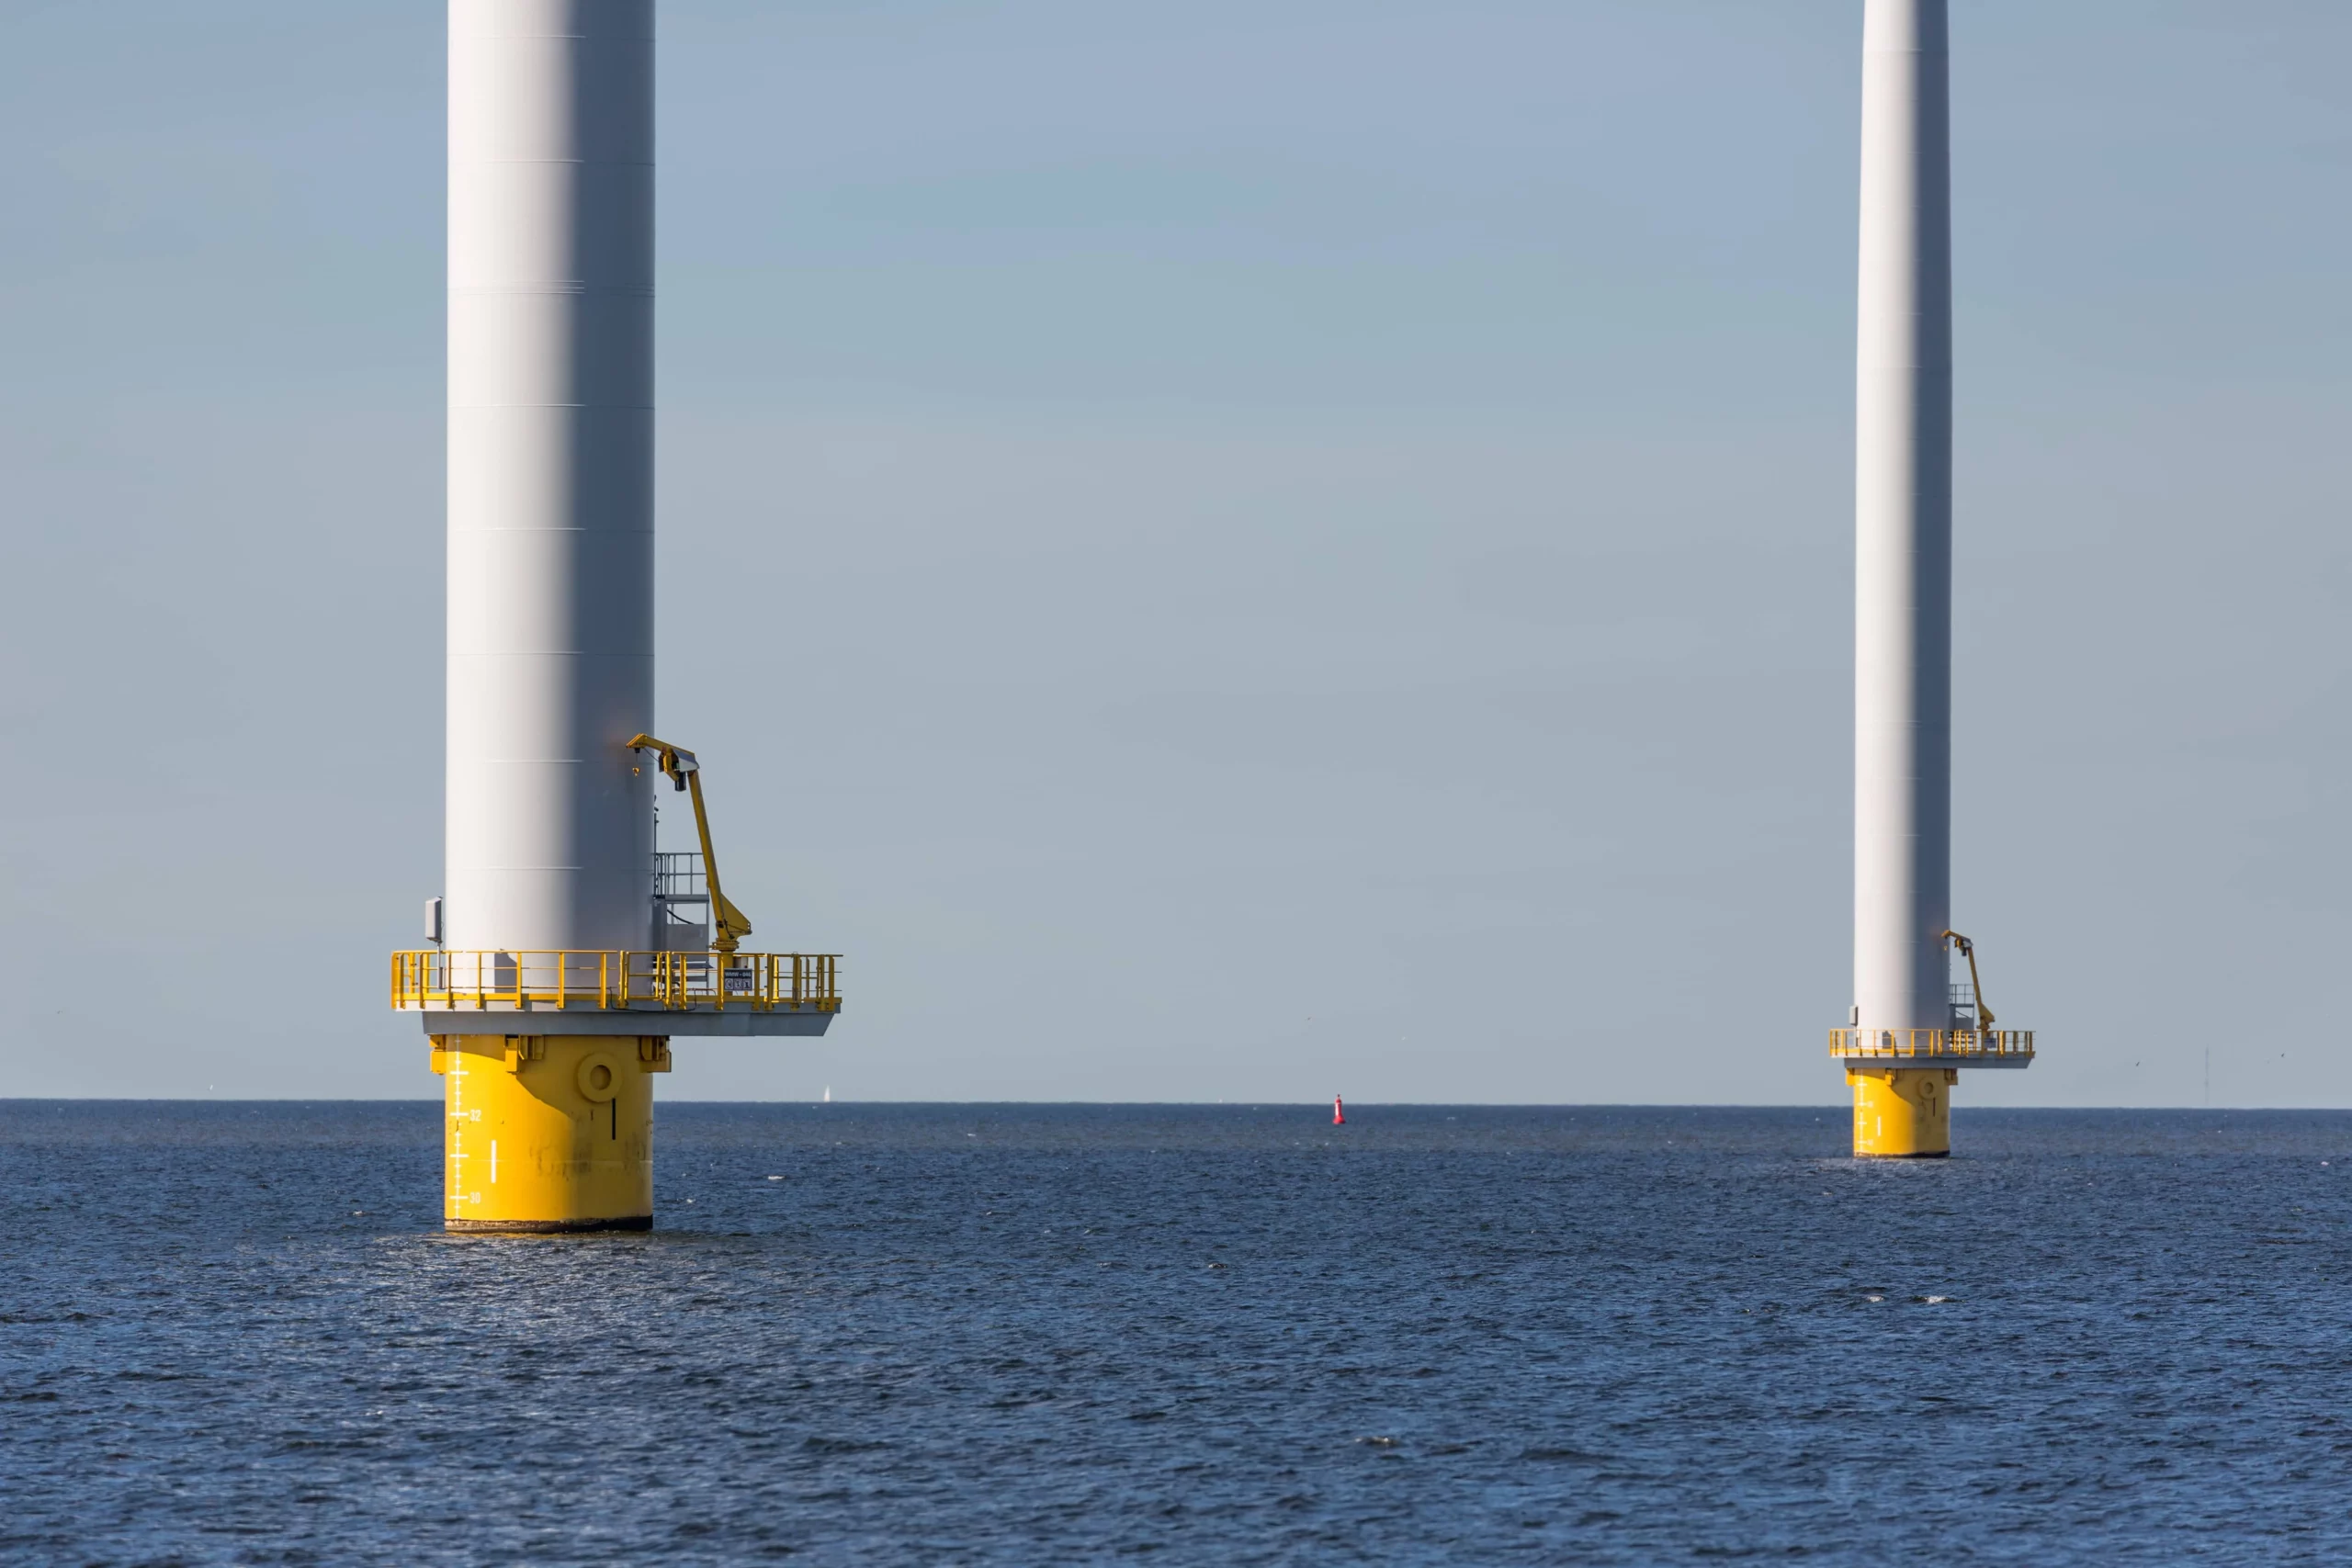 offshore wind farm turbines